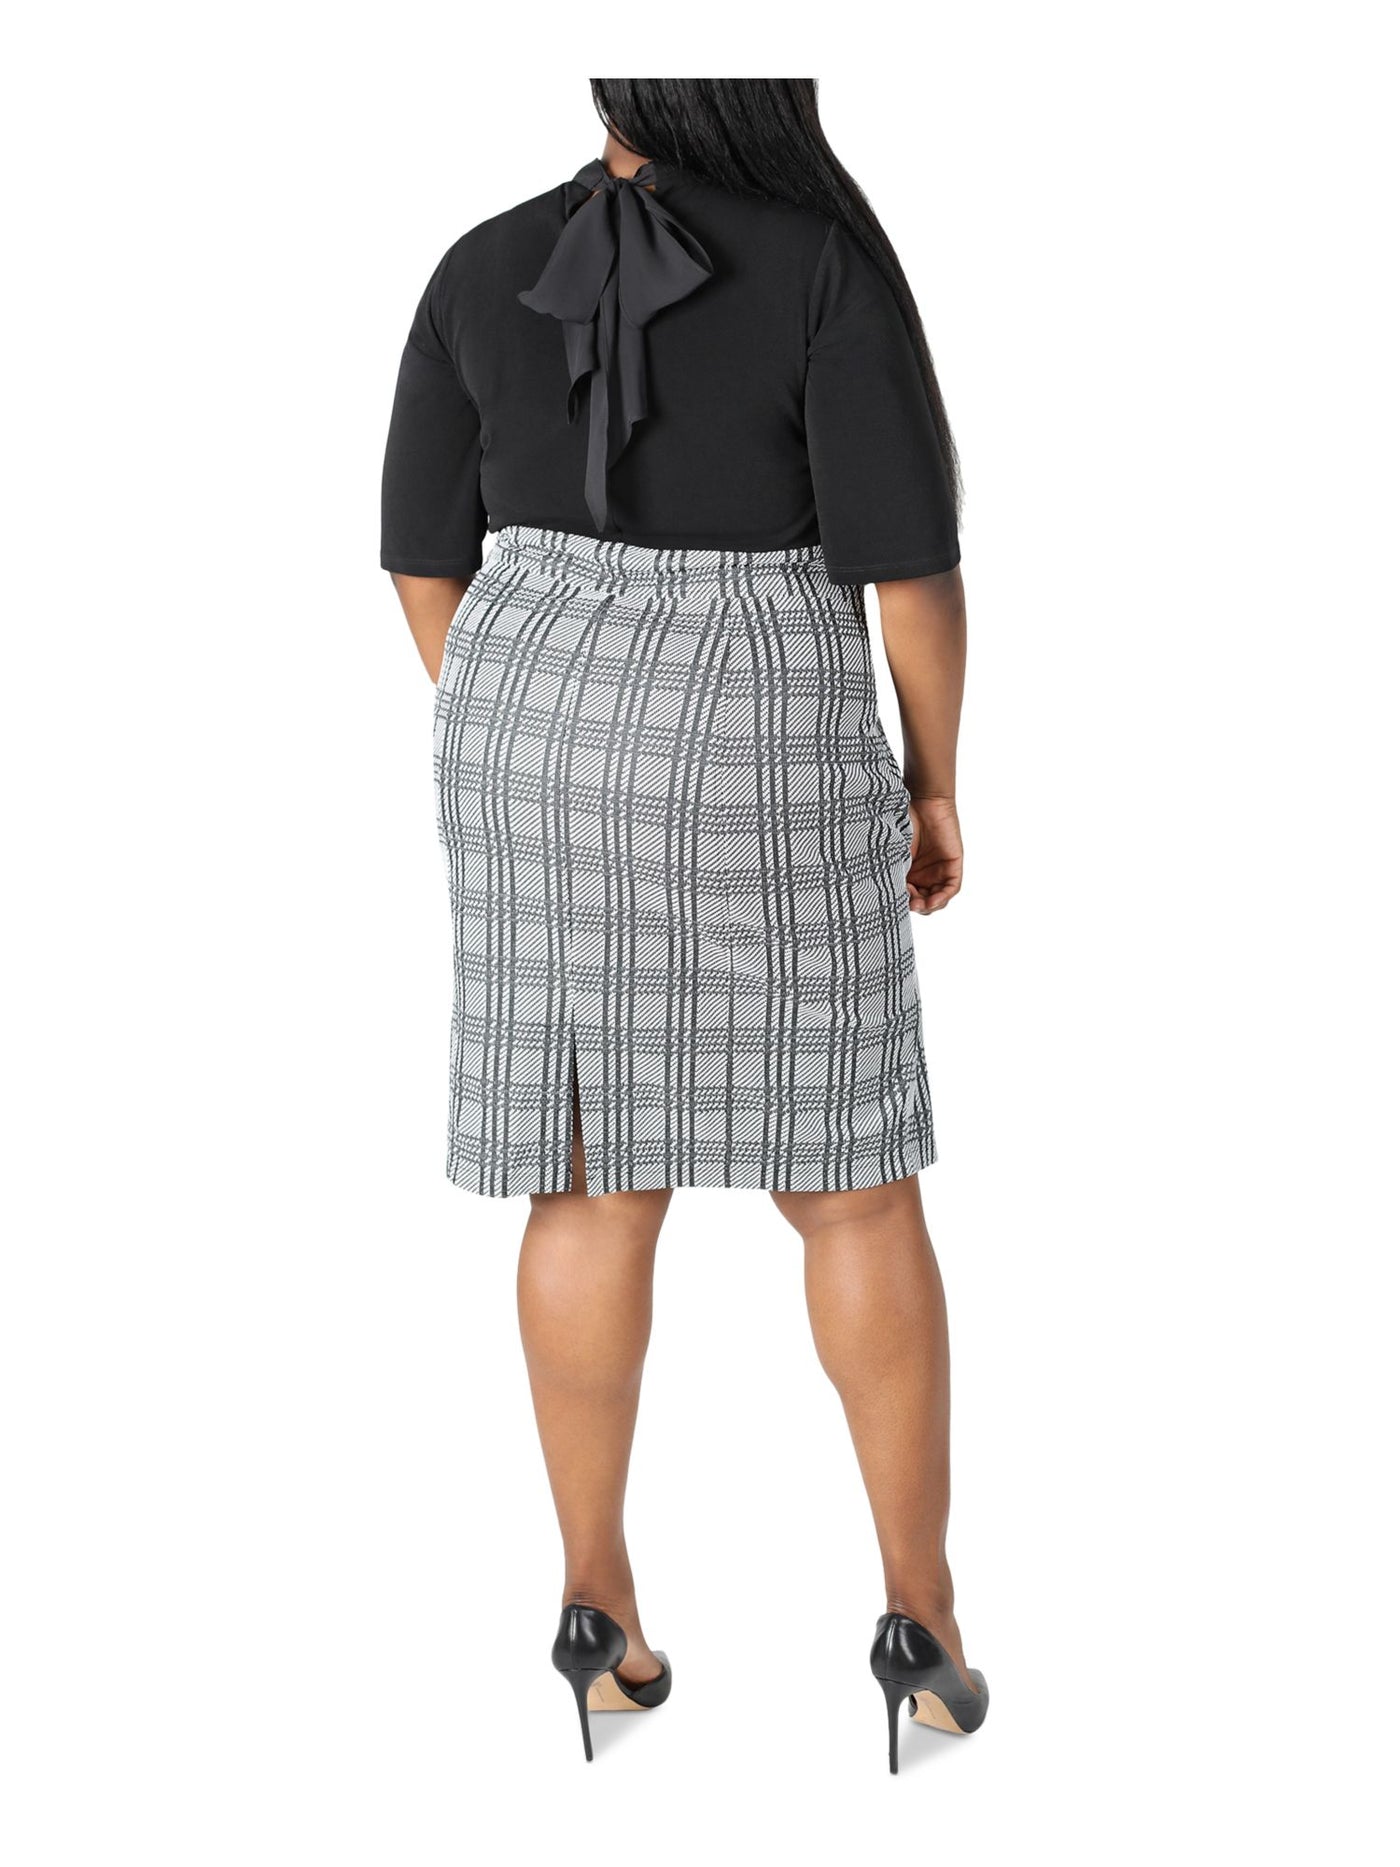 ROBBIE BEE Womens Black Knit Belted Tie Houndstooth Elbow Sleeve Mock Neck Knee Length Wear To Work Dress Plus 2X